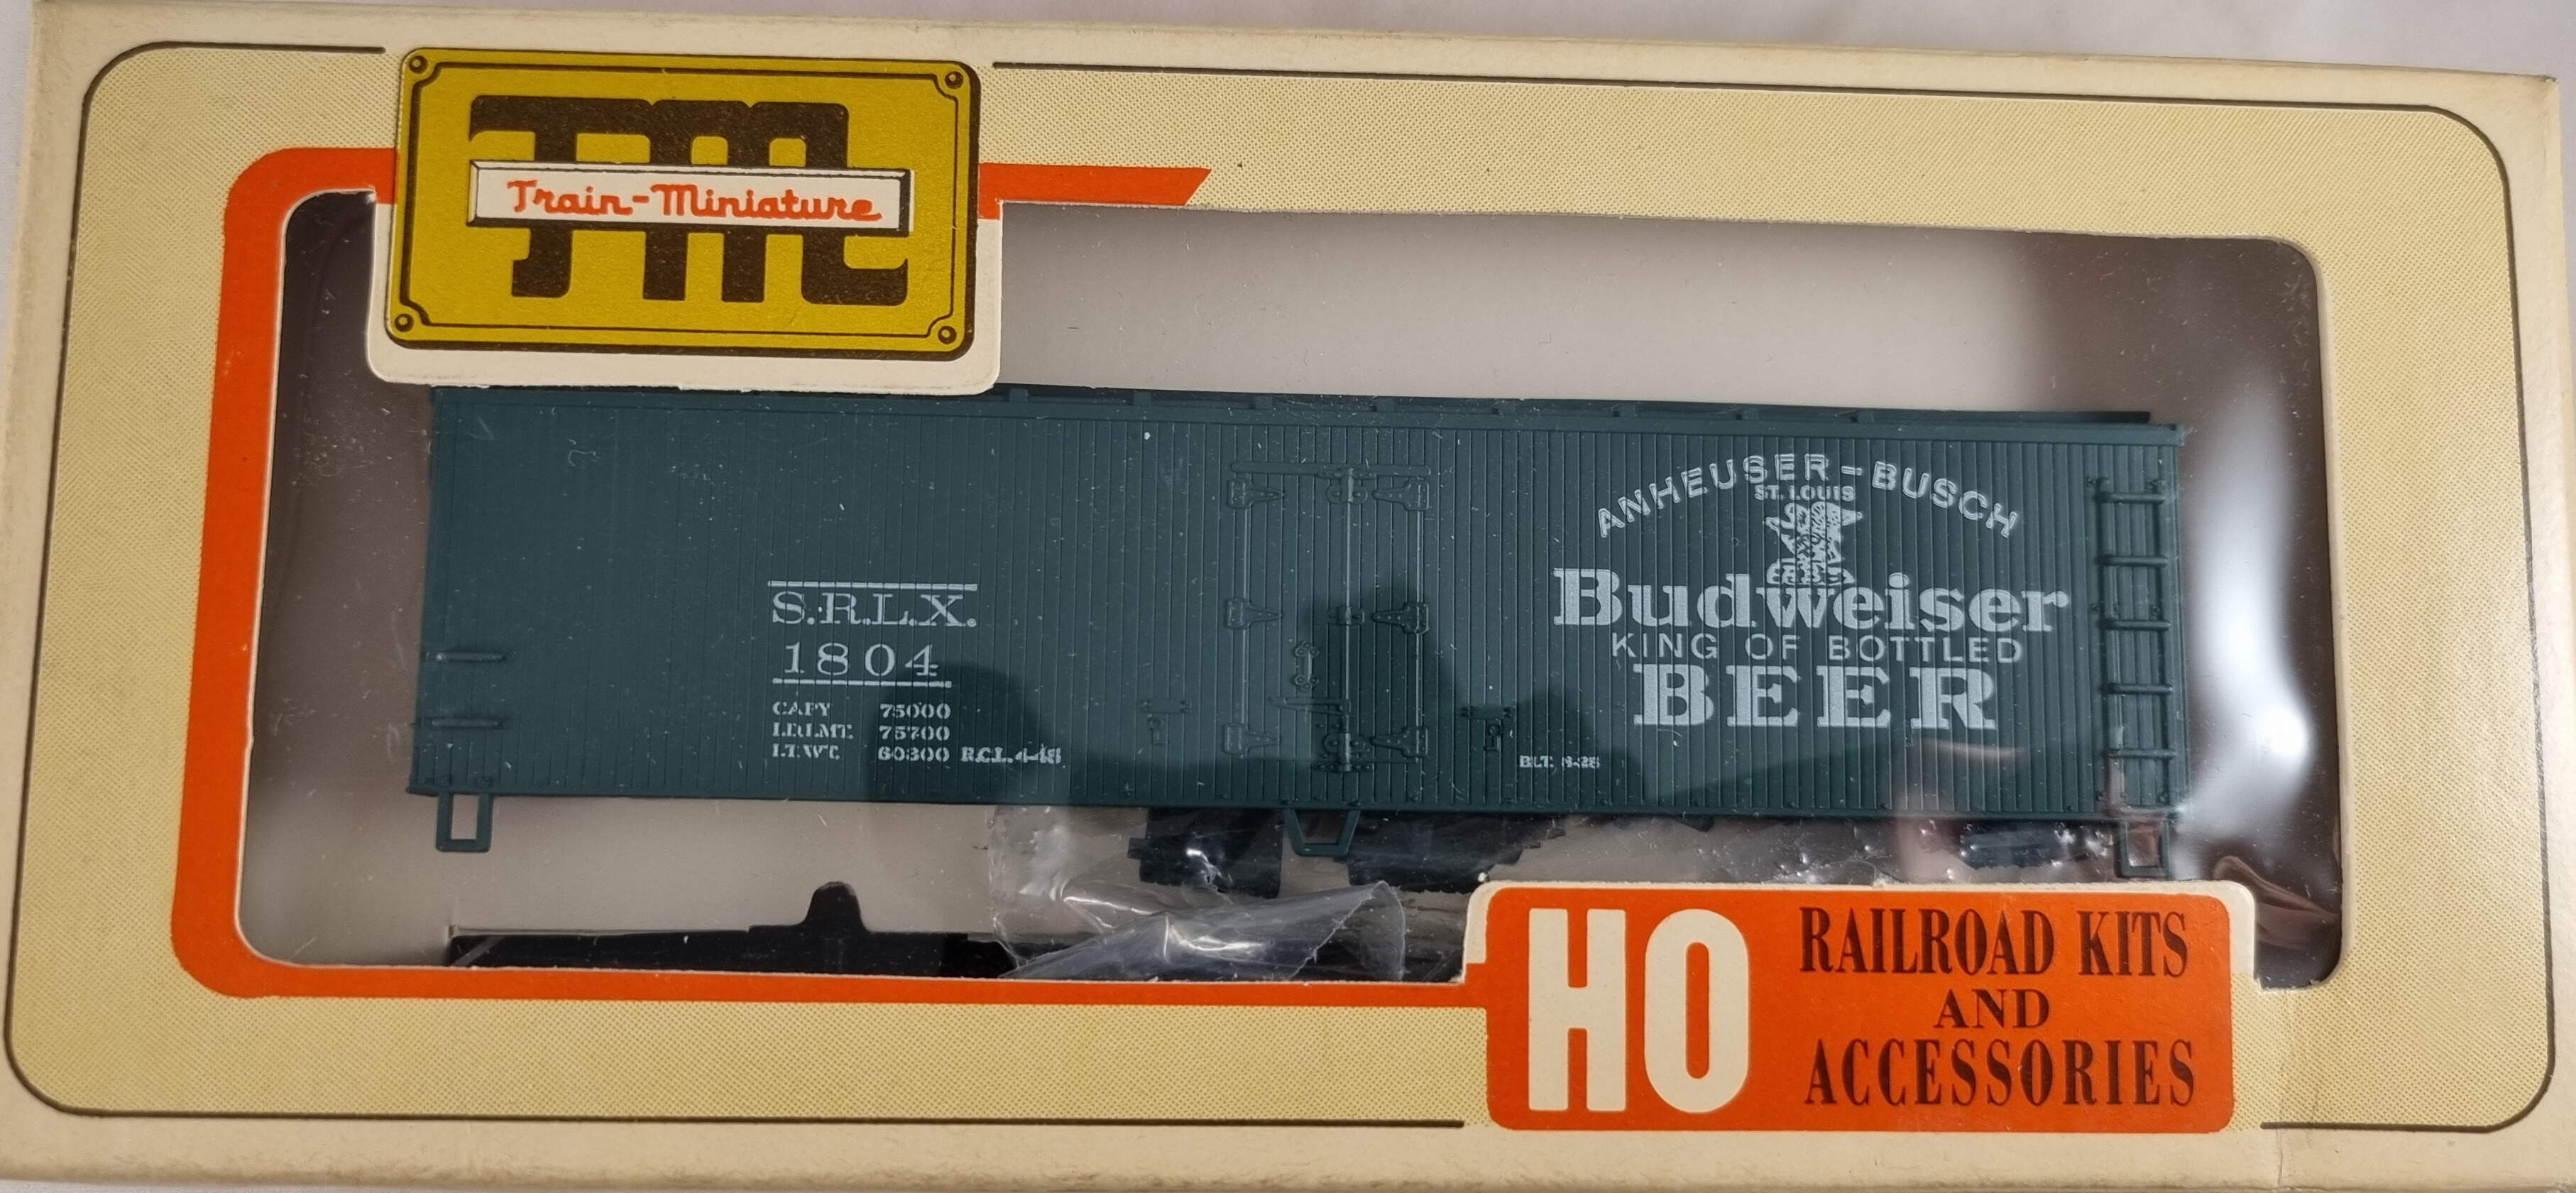 Train-miniature 2406, boxcar, skala H0